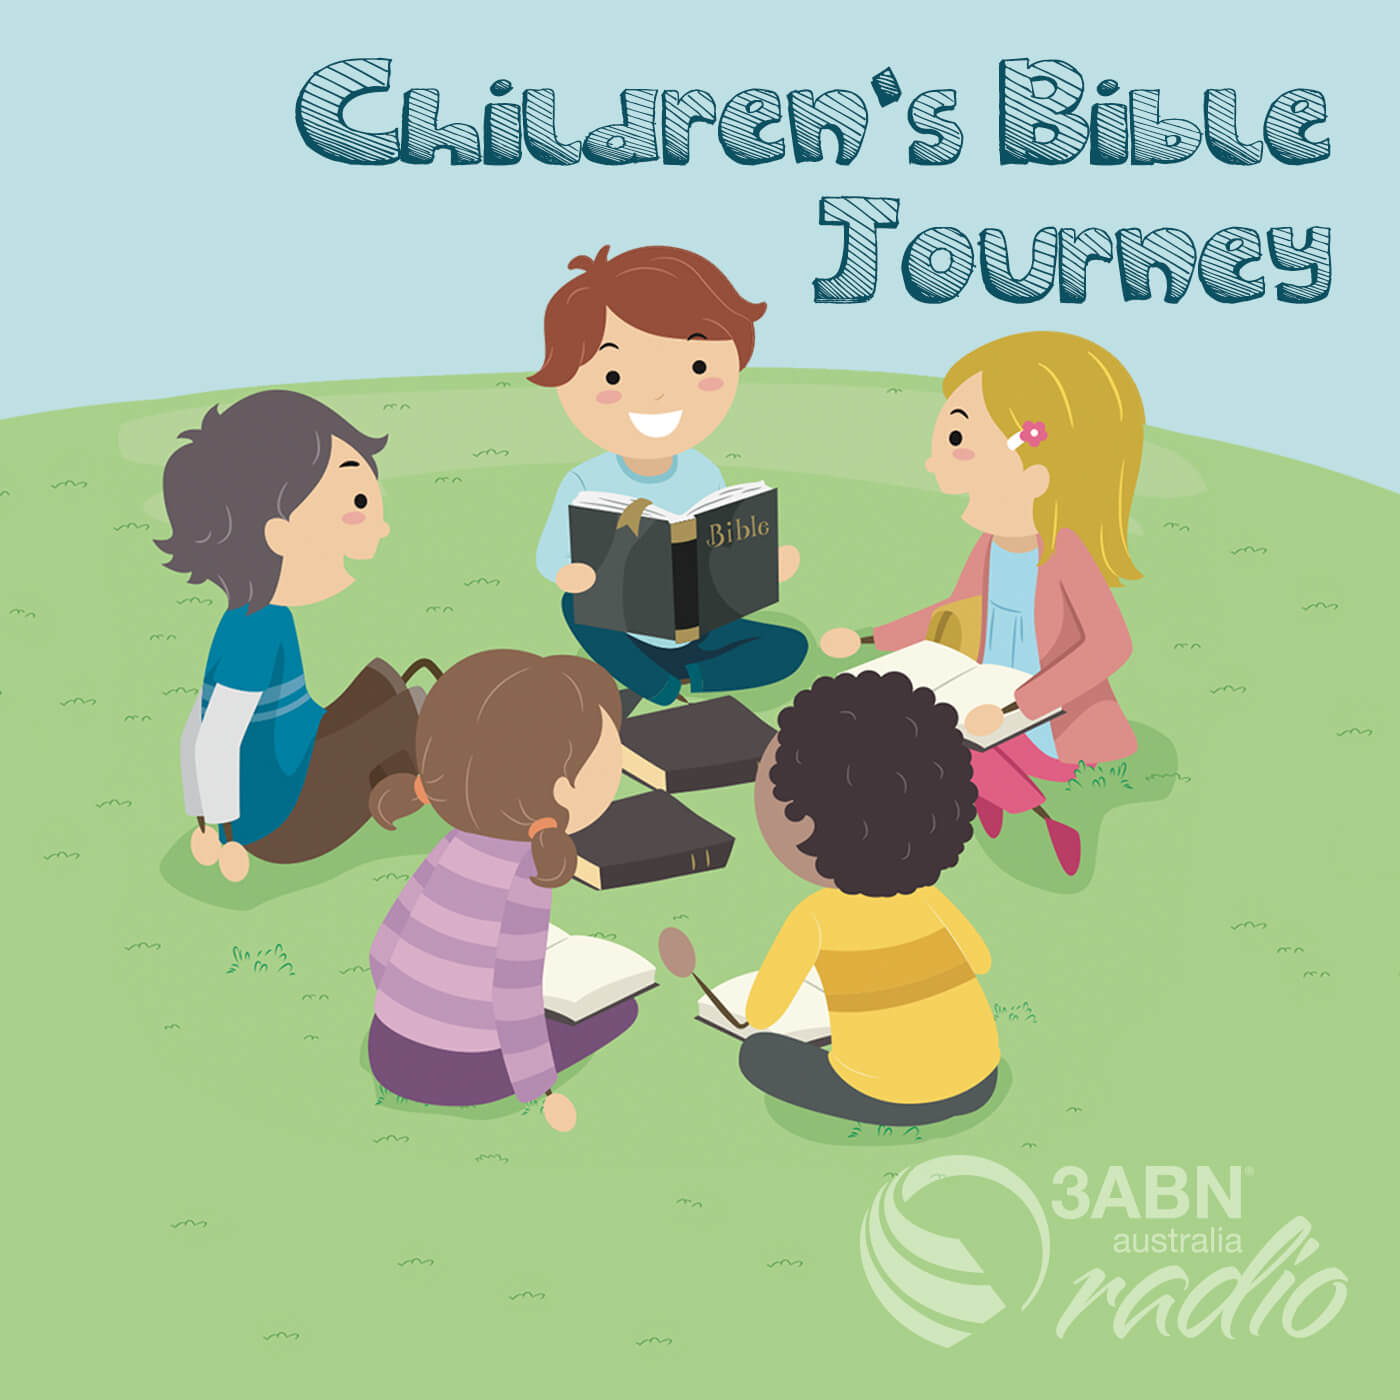 Children’s Bible Journey - 2208